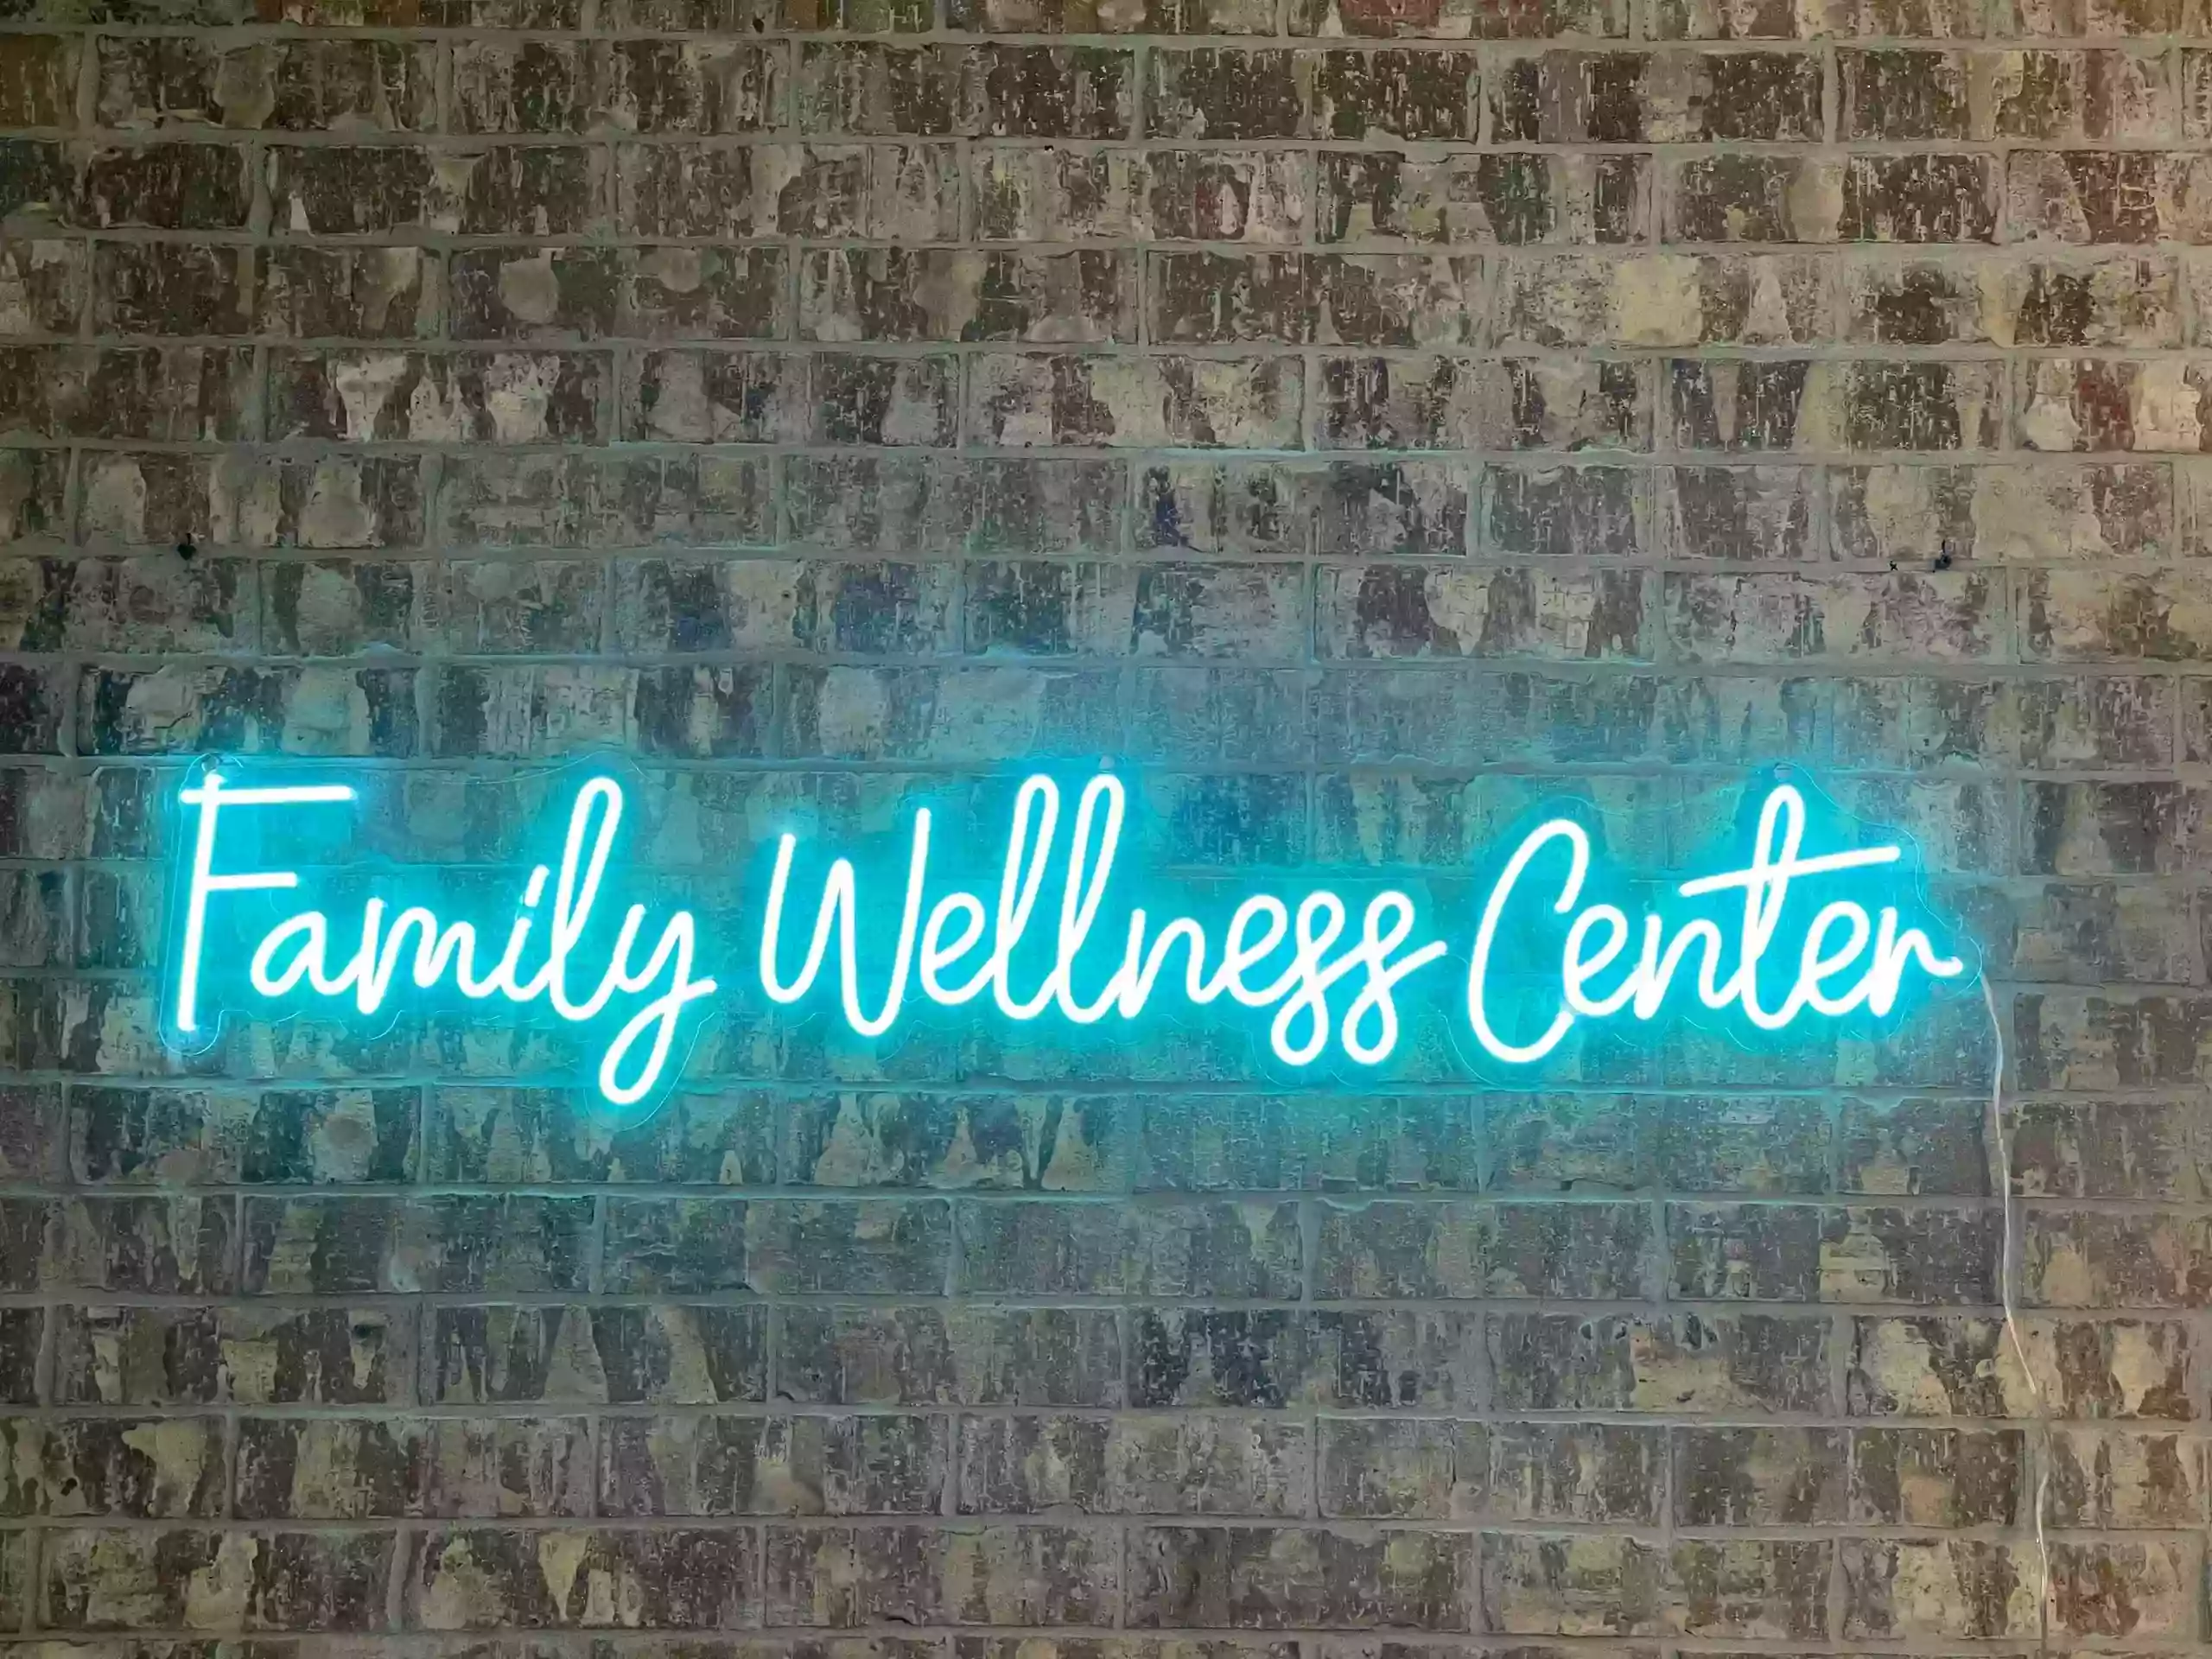 Family Wellness Center of Norman